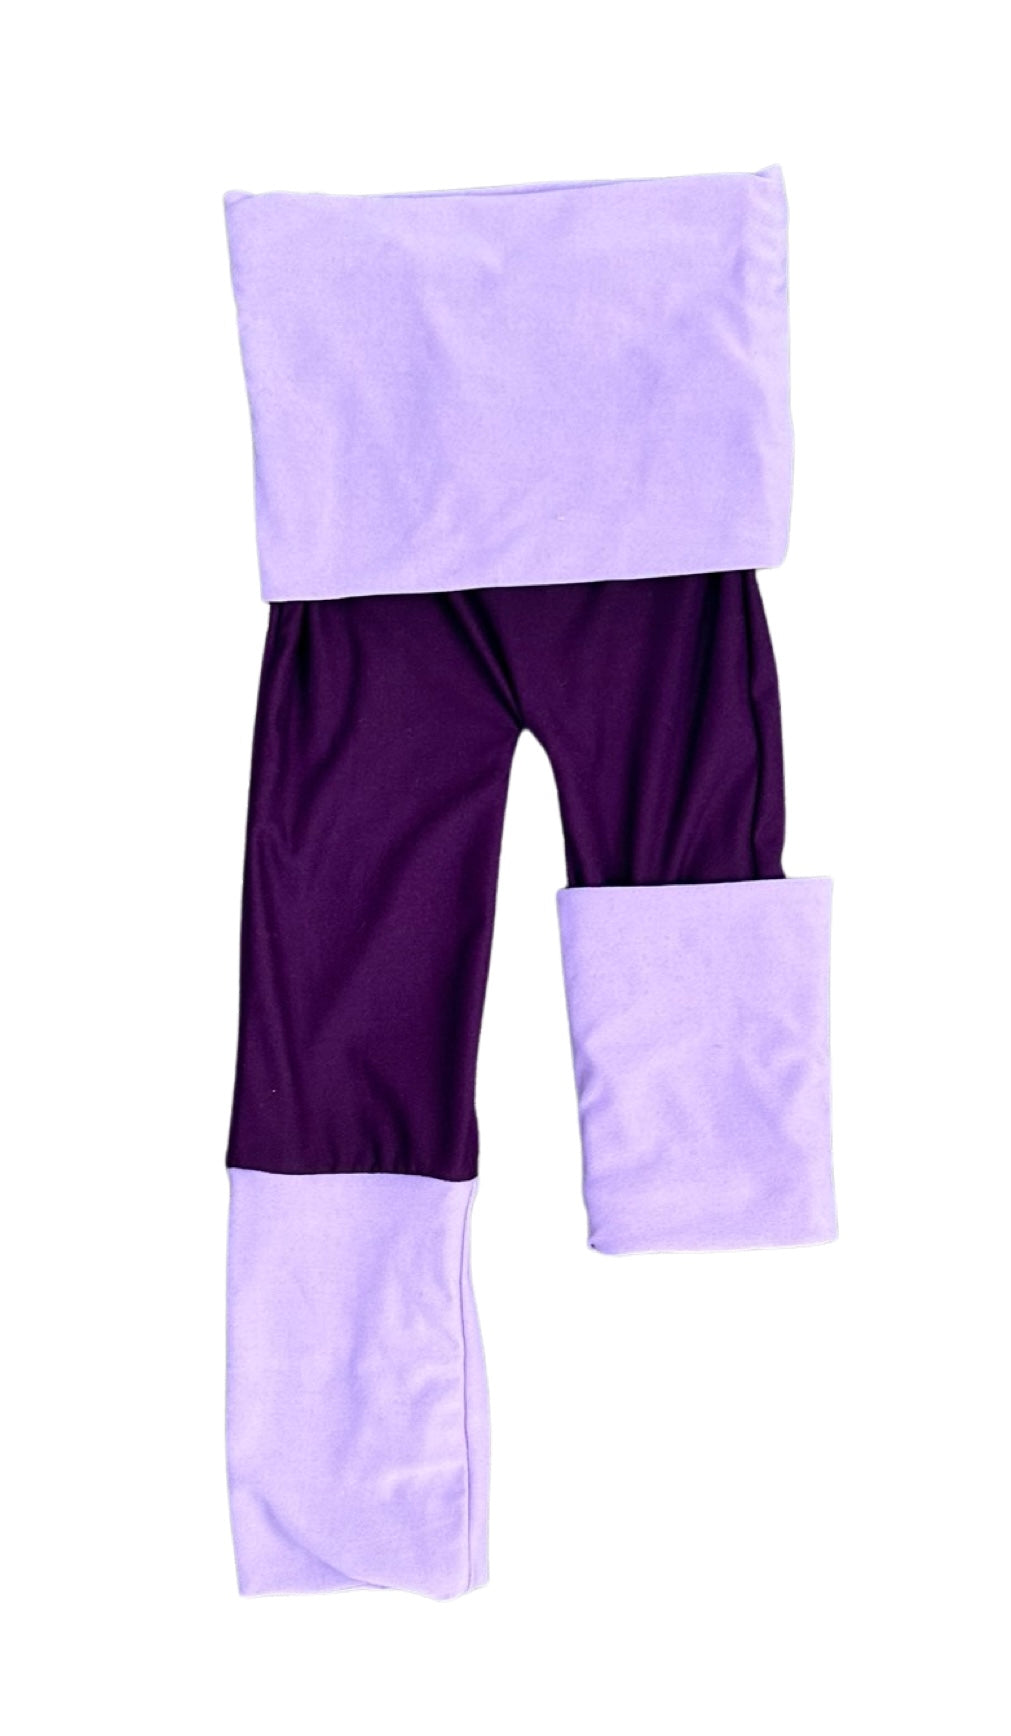 Adjustable Pants - Dark Purple with Lavender